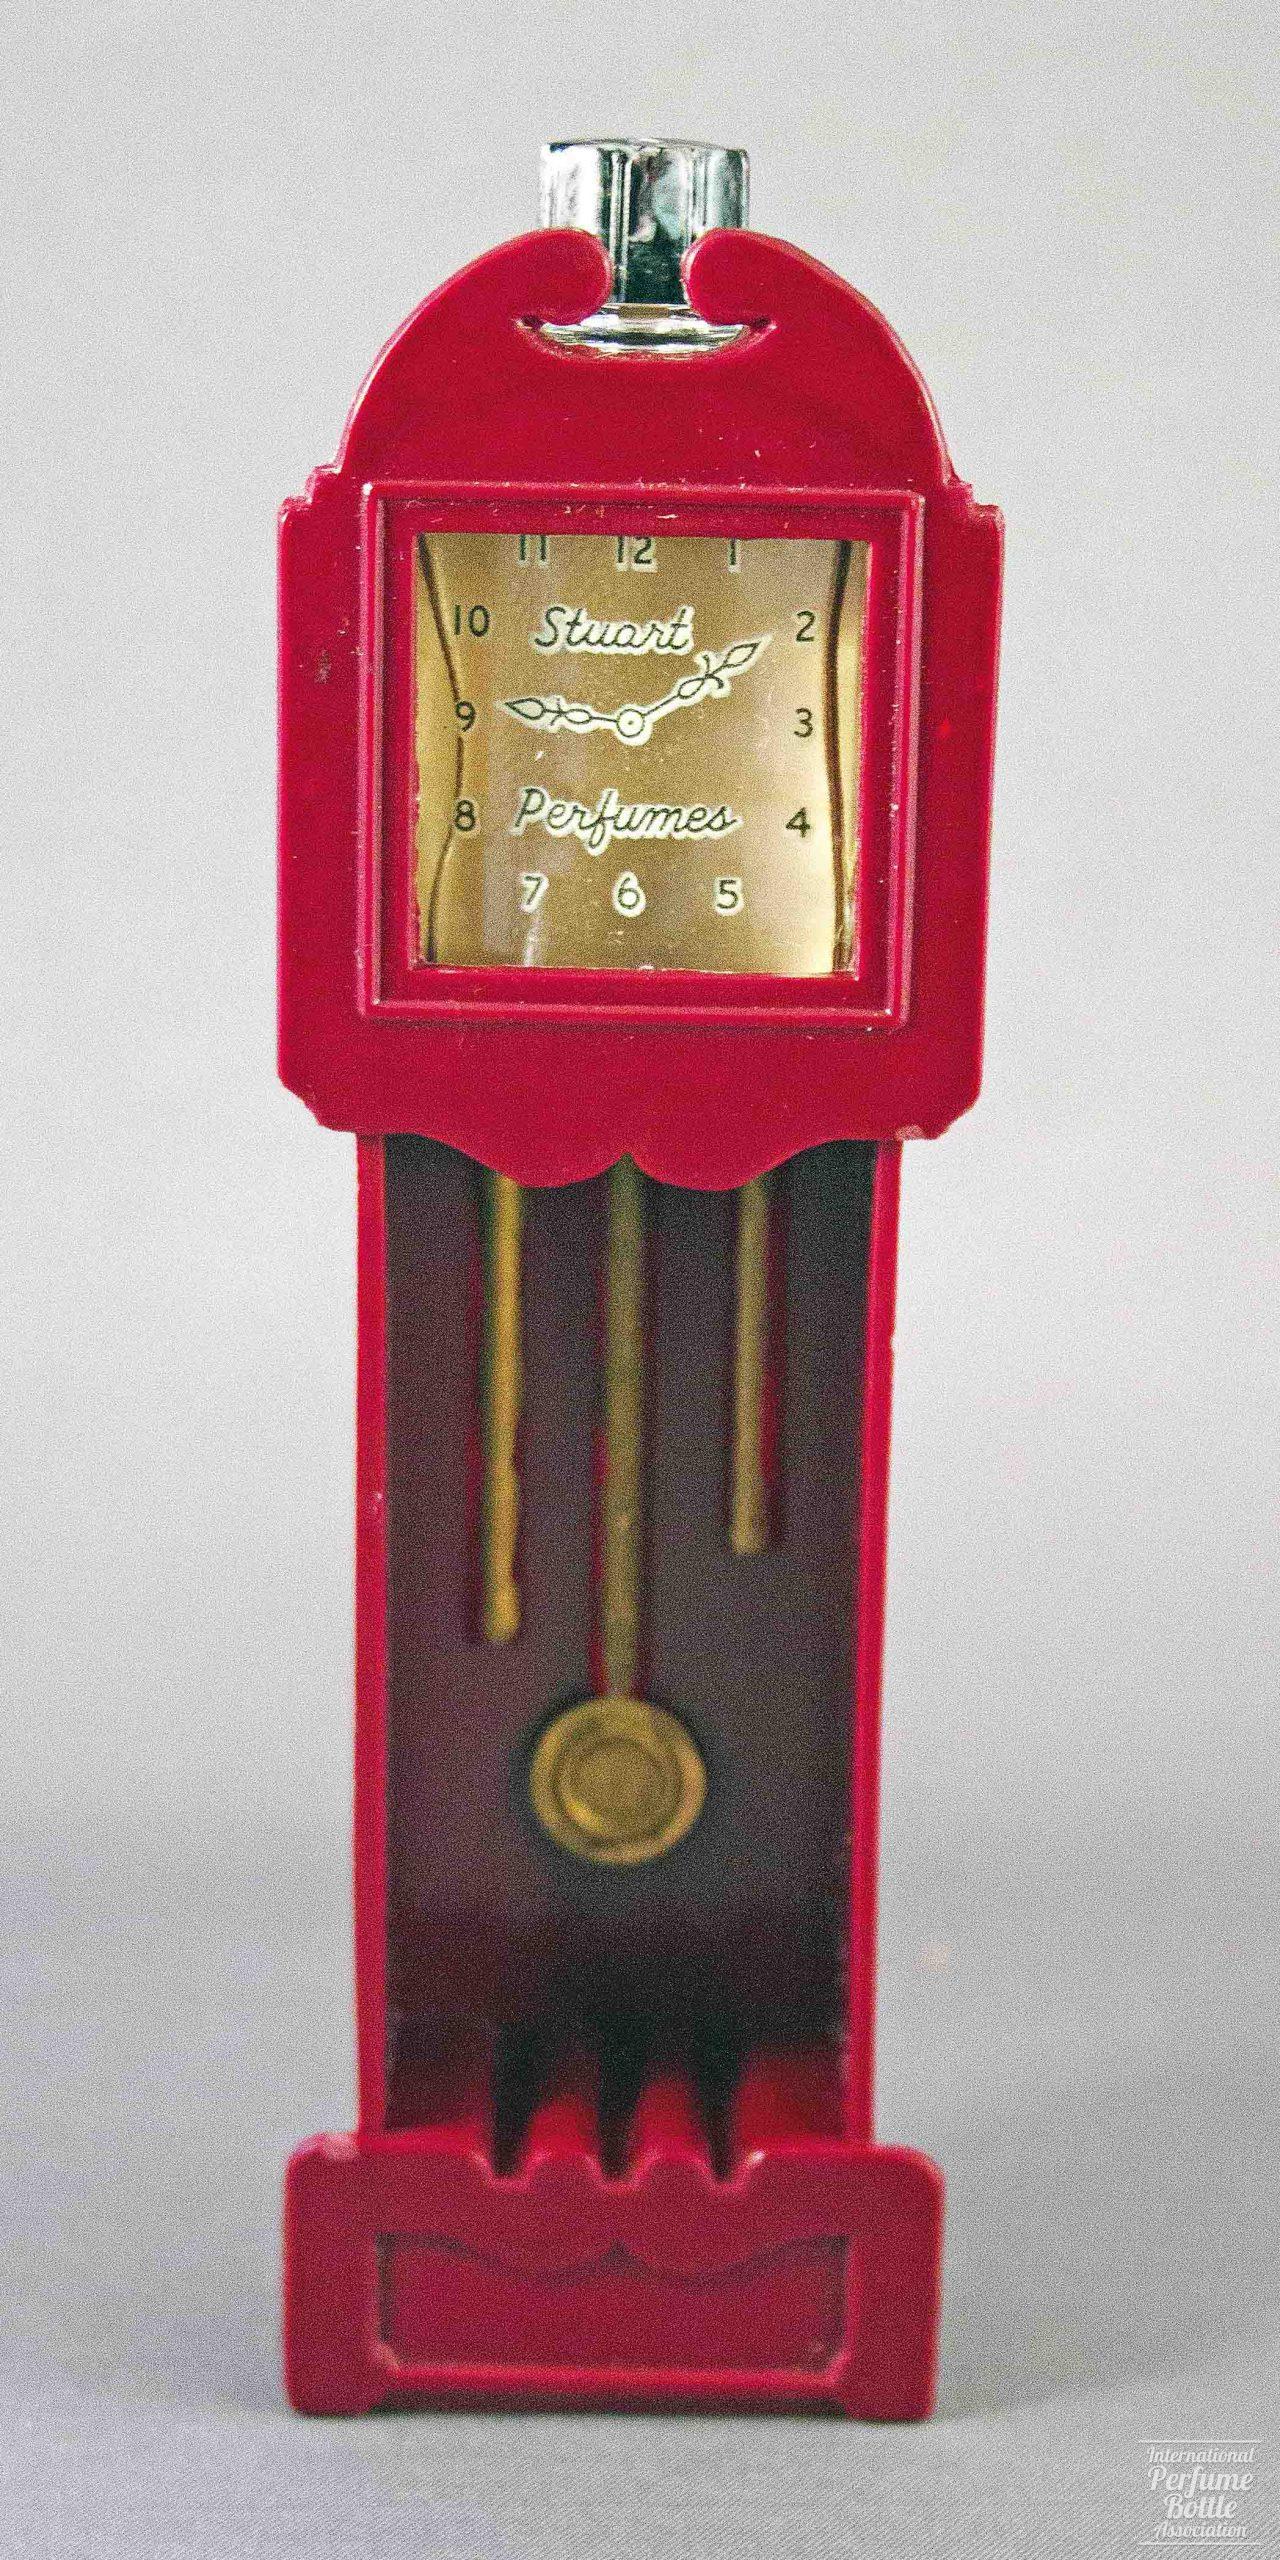 "Perfume O'Clock" by Stuart Products